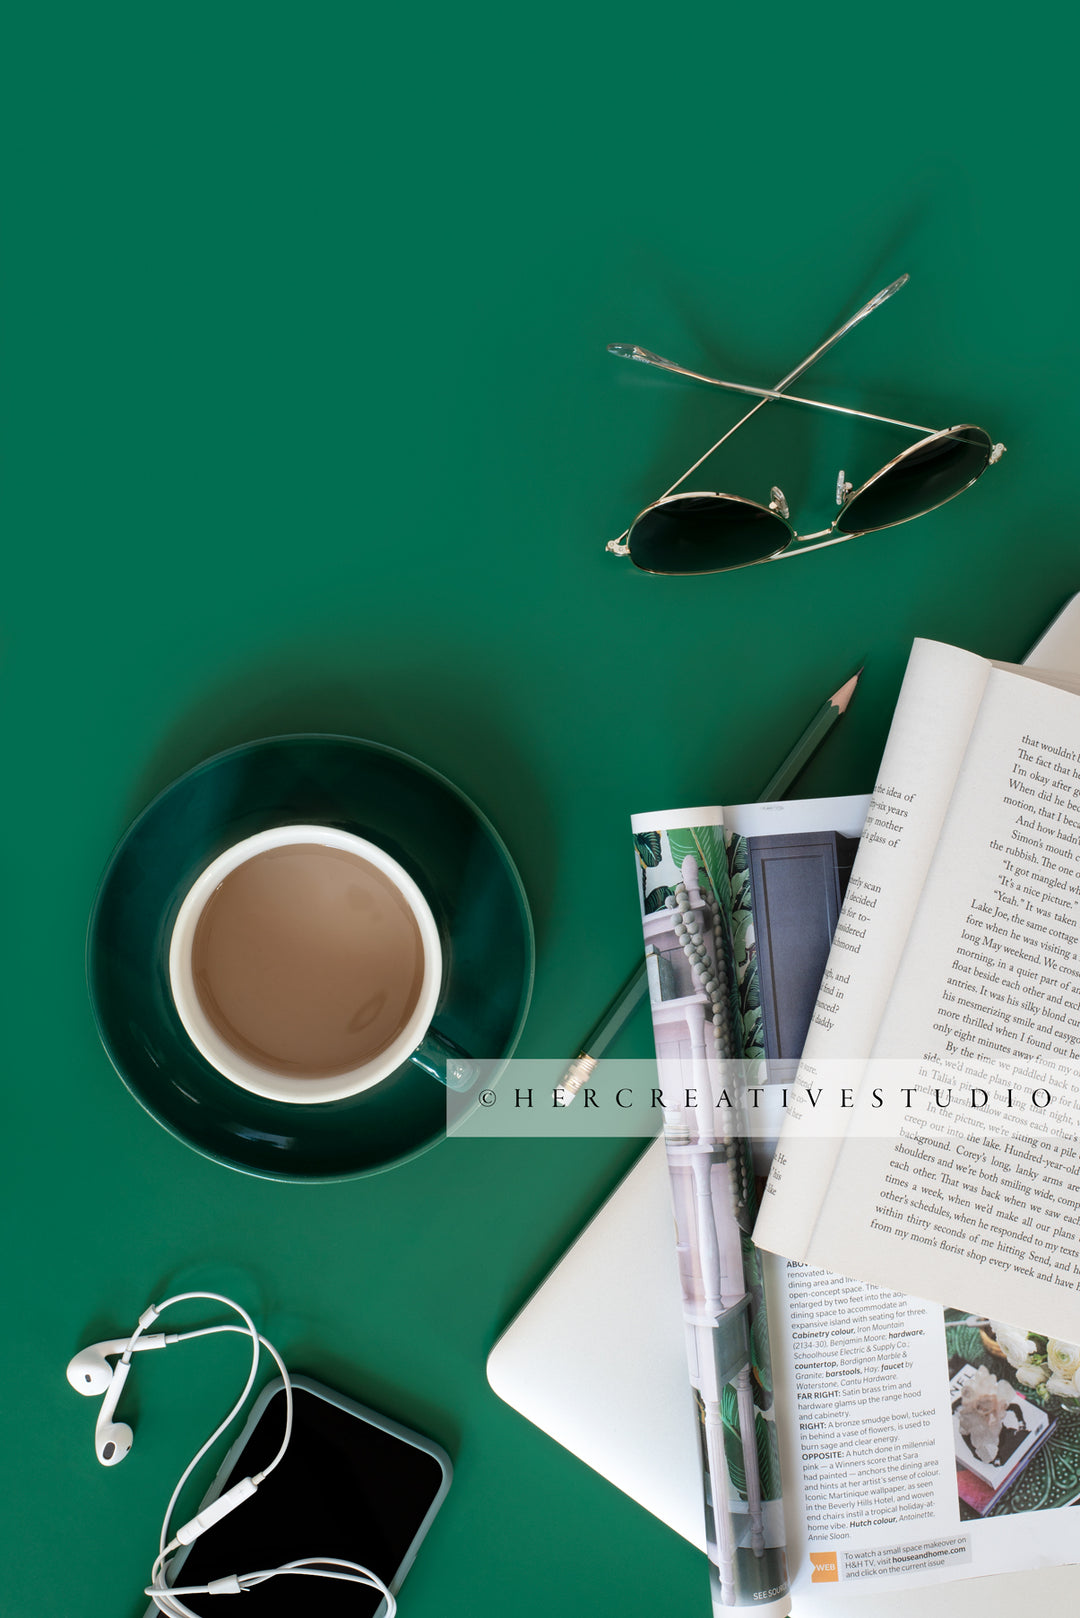 Sunglasses, Smartphone & Coffee on Green Background. Stock Image